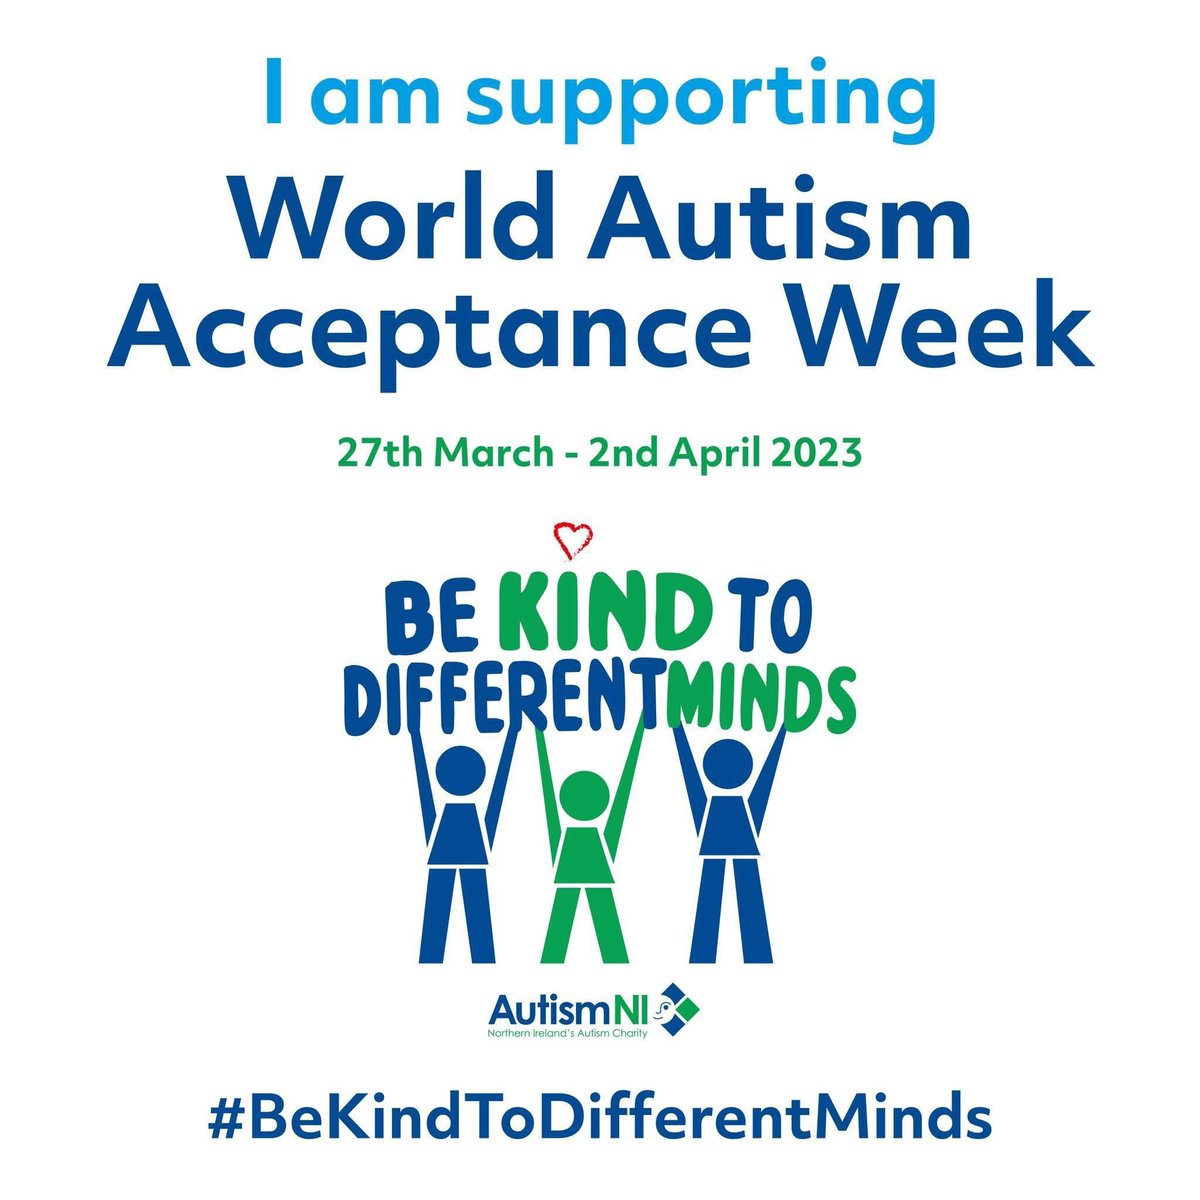 #AutismAwarenessWeek #BeKindToDifferentMinds